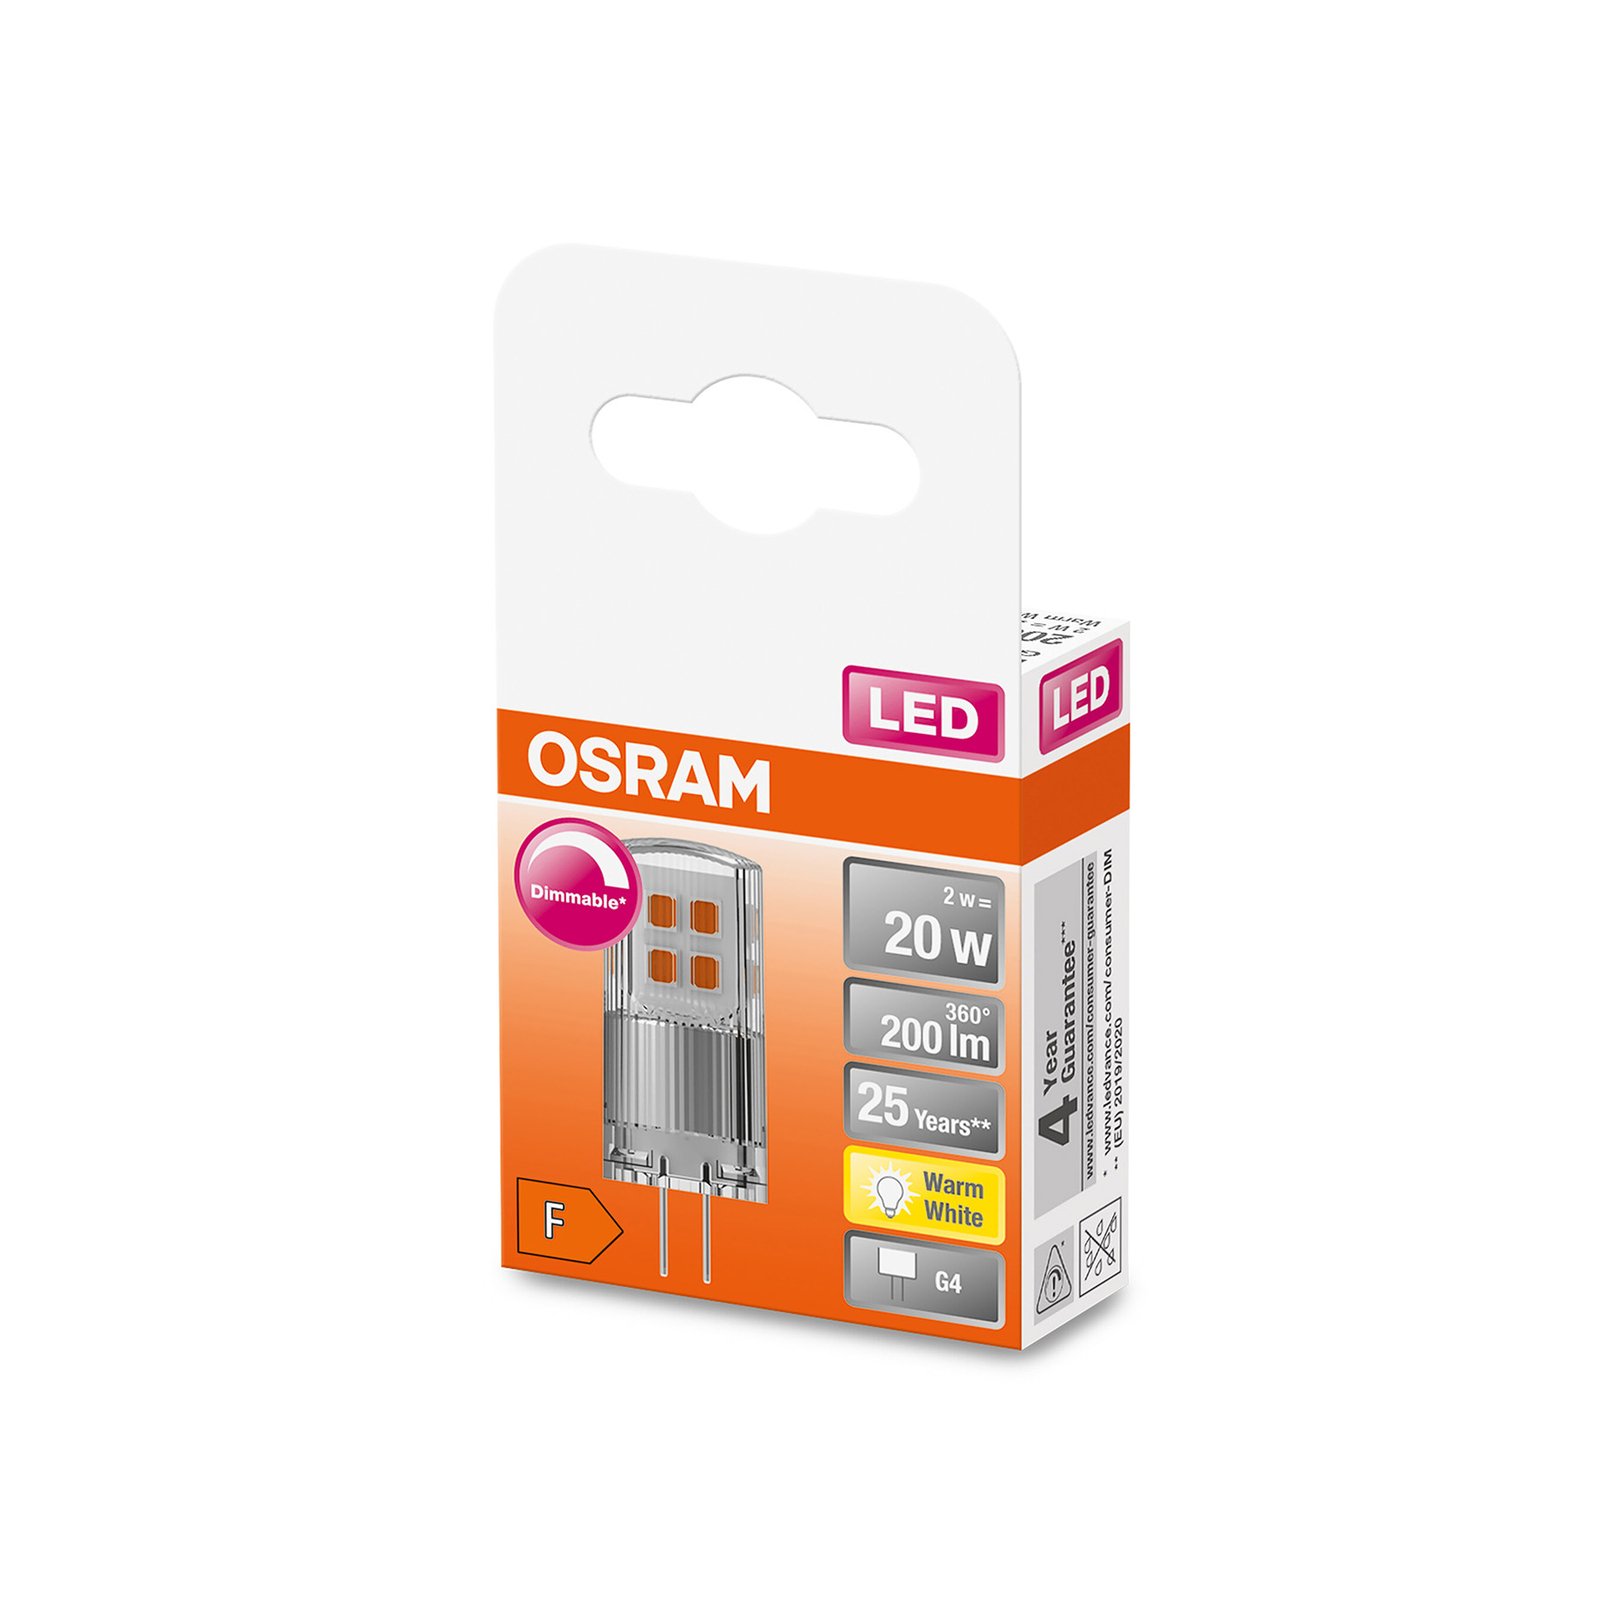 OSRAM PIN 12 V LED kapszula G4 2 W 200 lm dimm